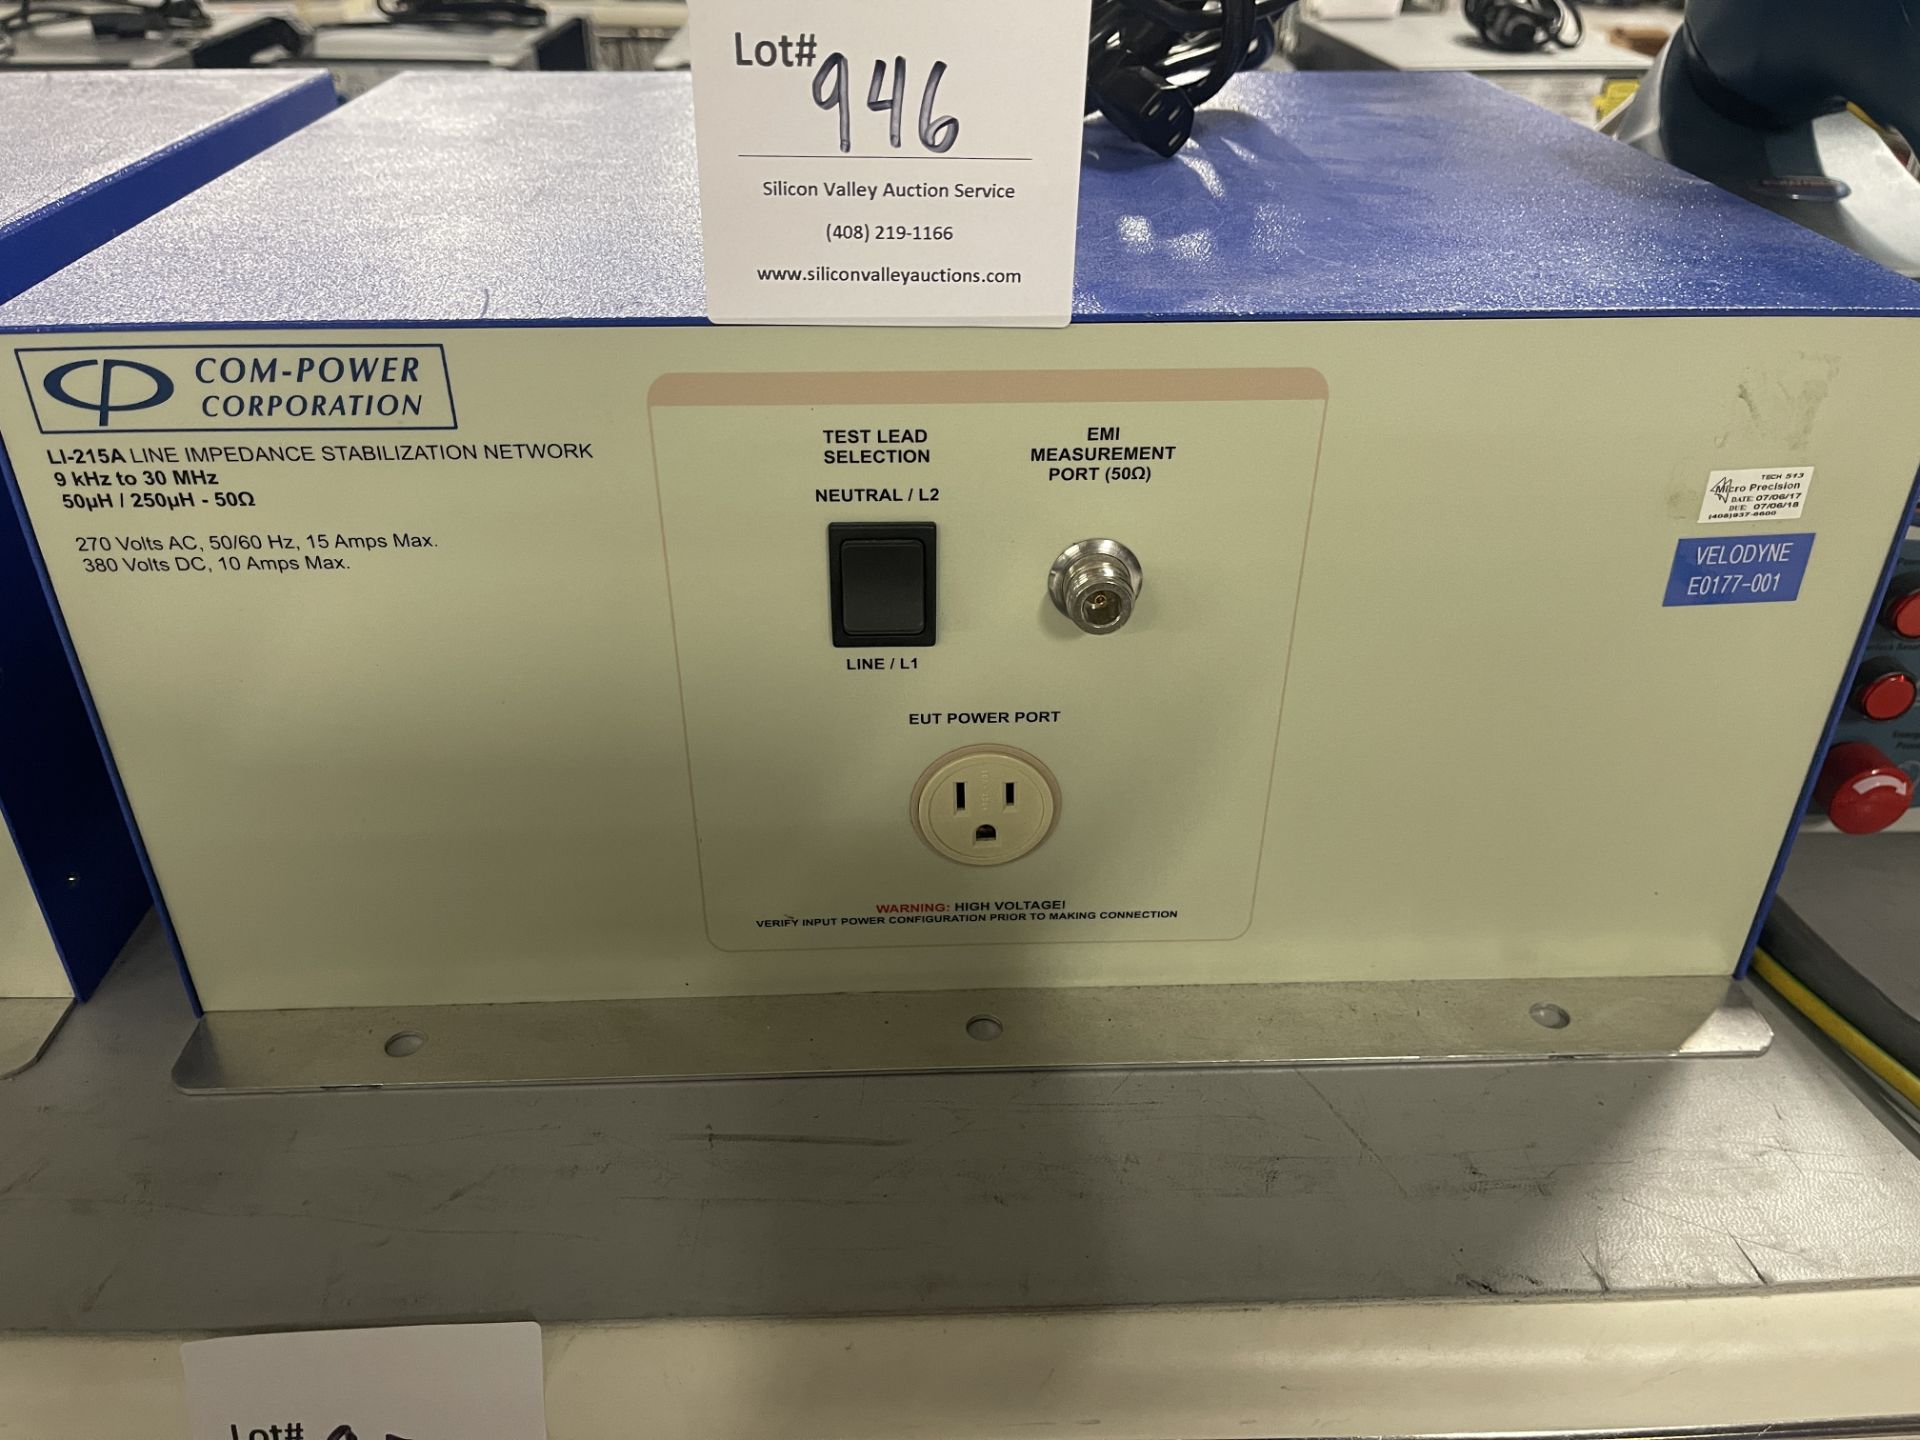 Com-Power Corp LI-215A Line Impedance Stabilization Network